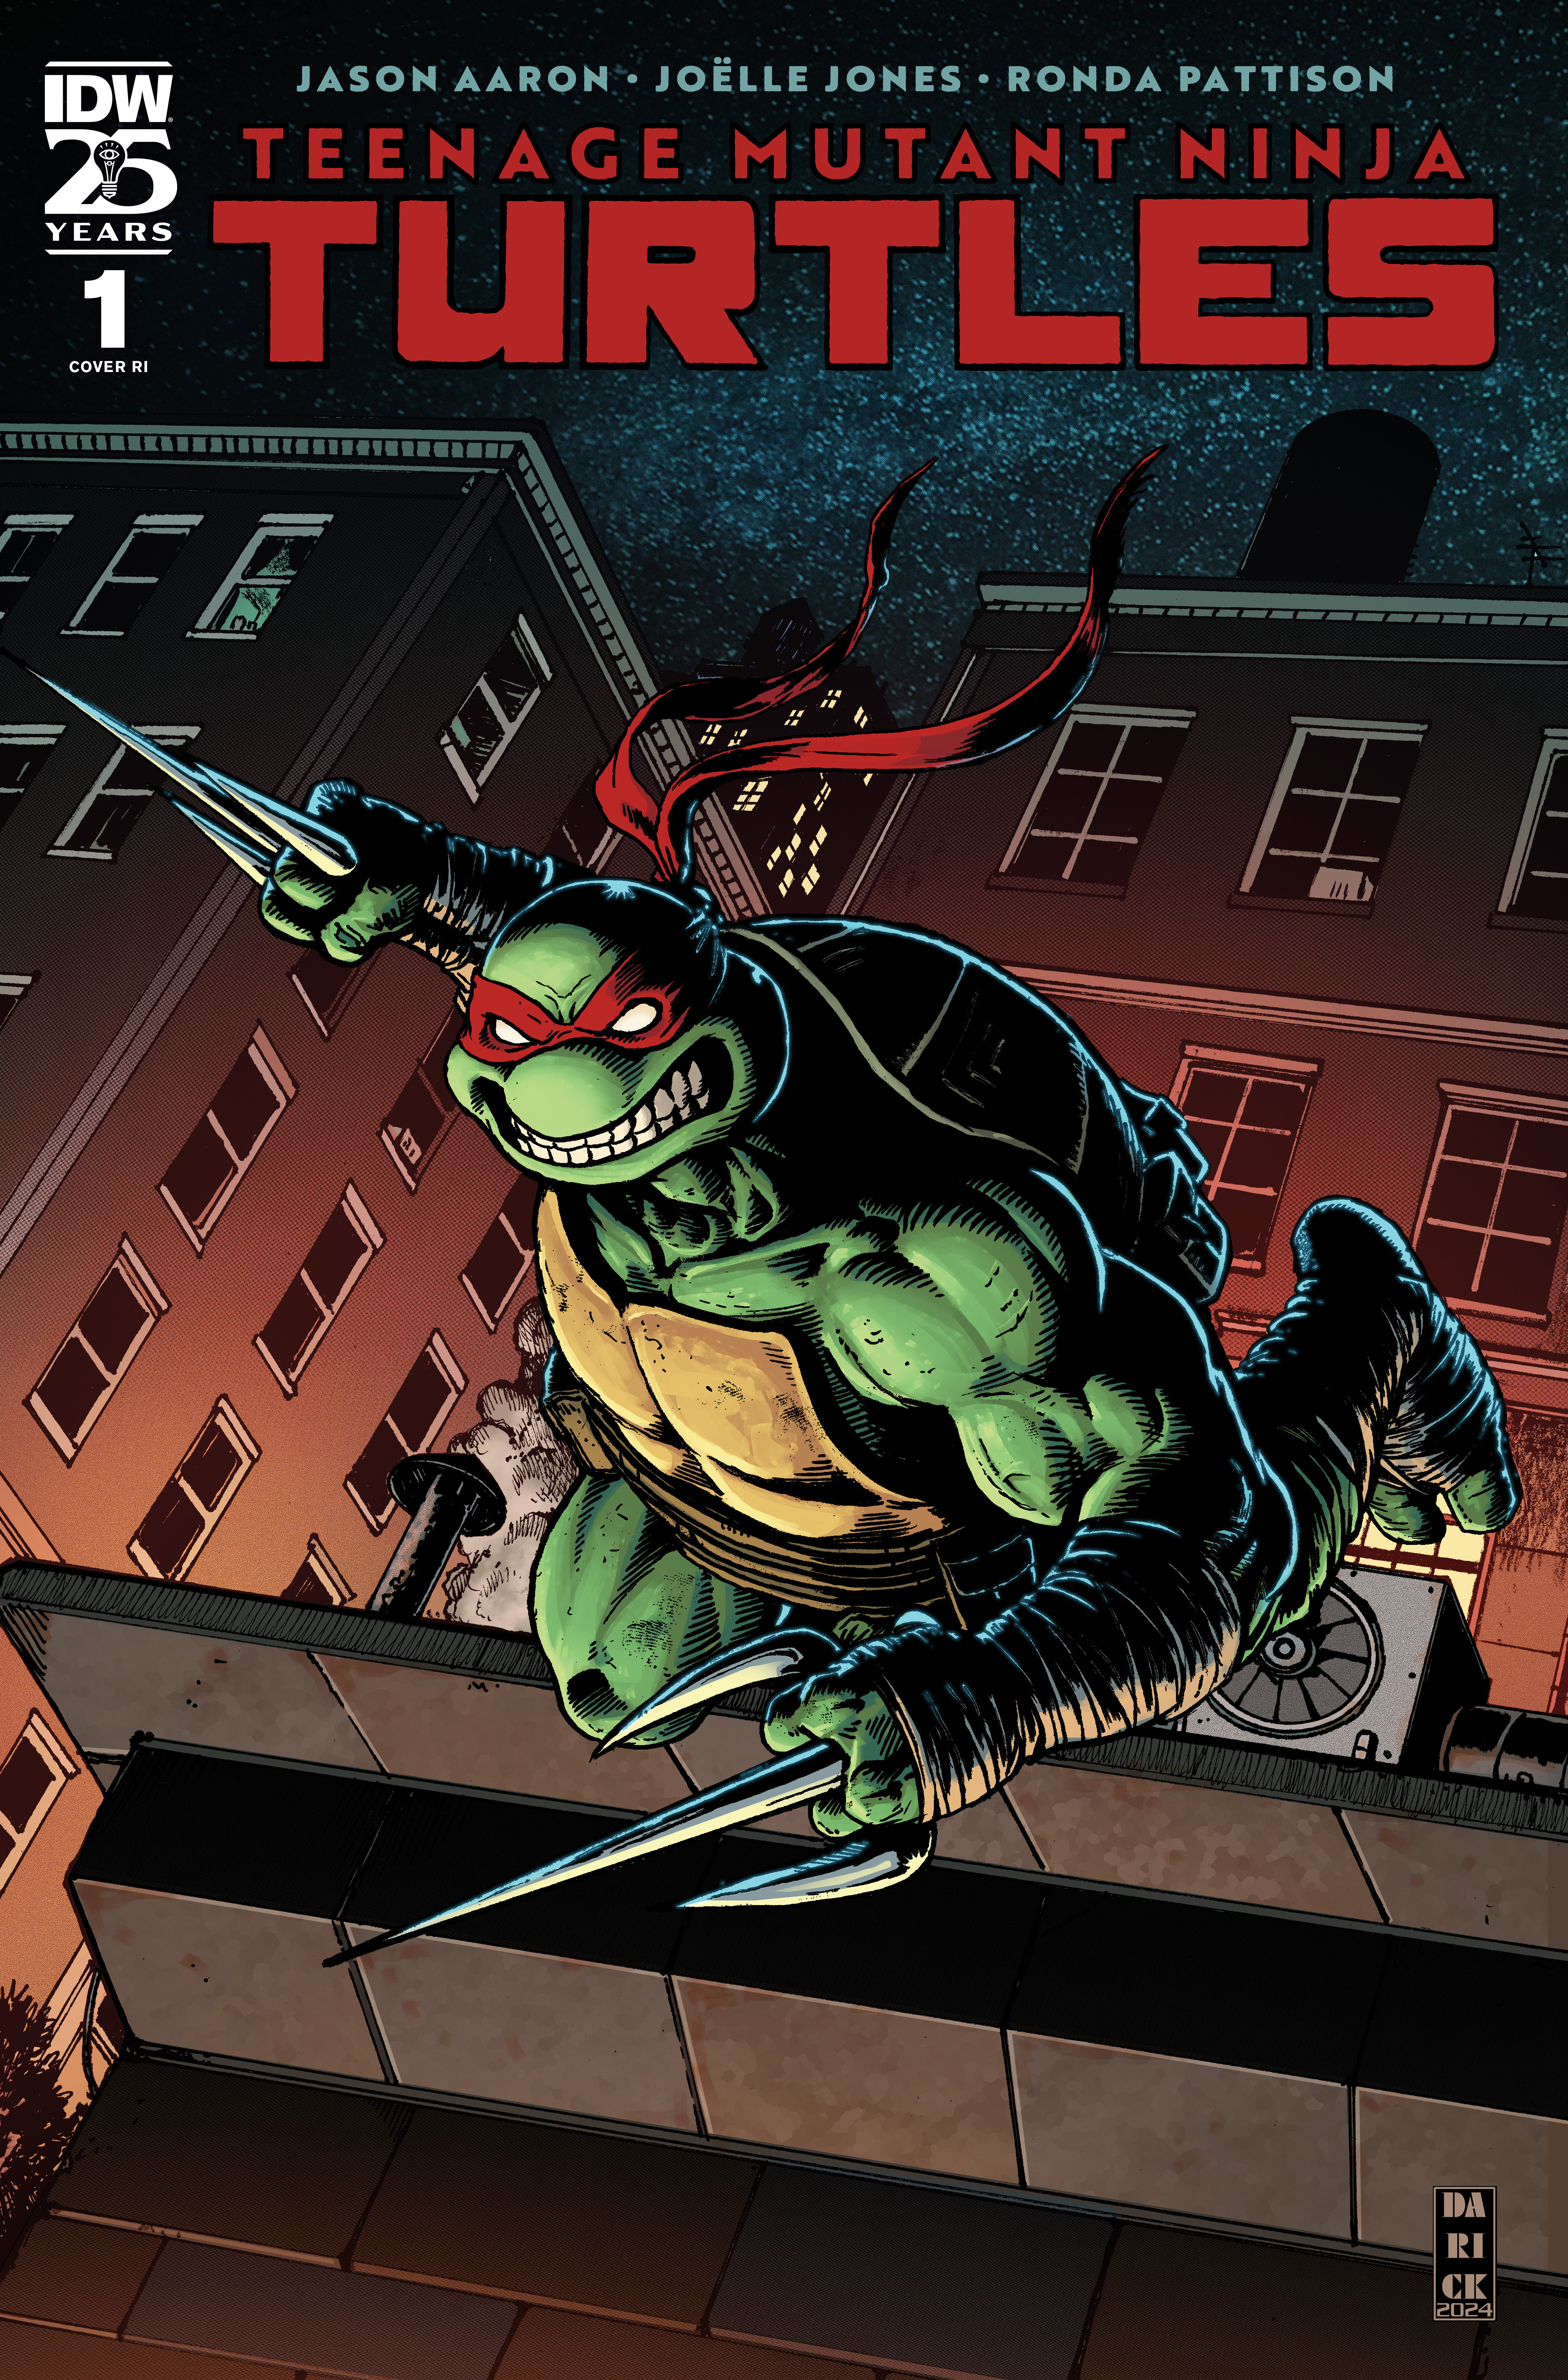 Teenage Mutant Ninja Turtles #1 Cover Robertson 1 for 50 Variant